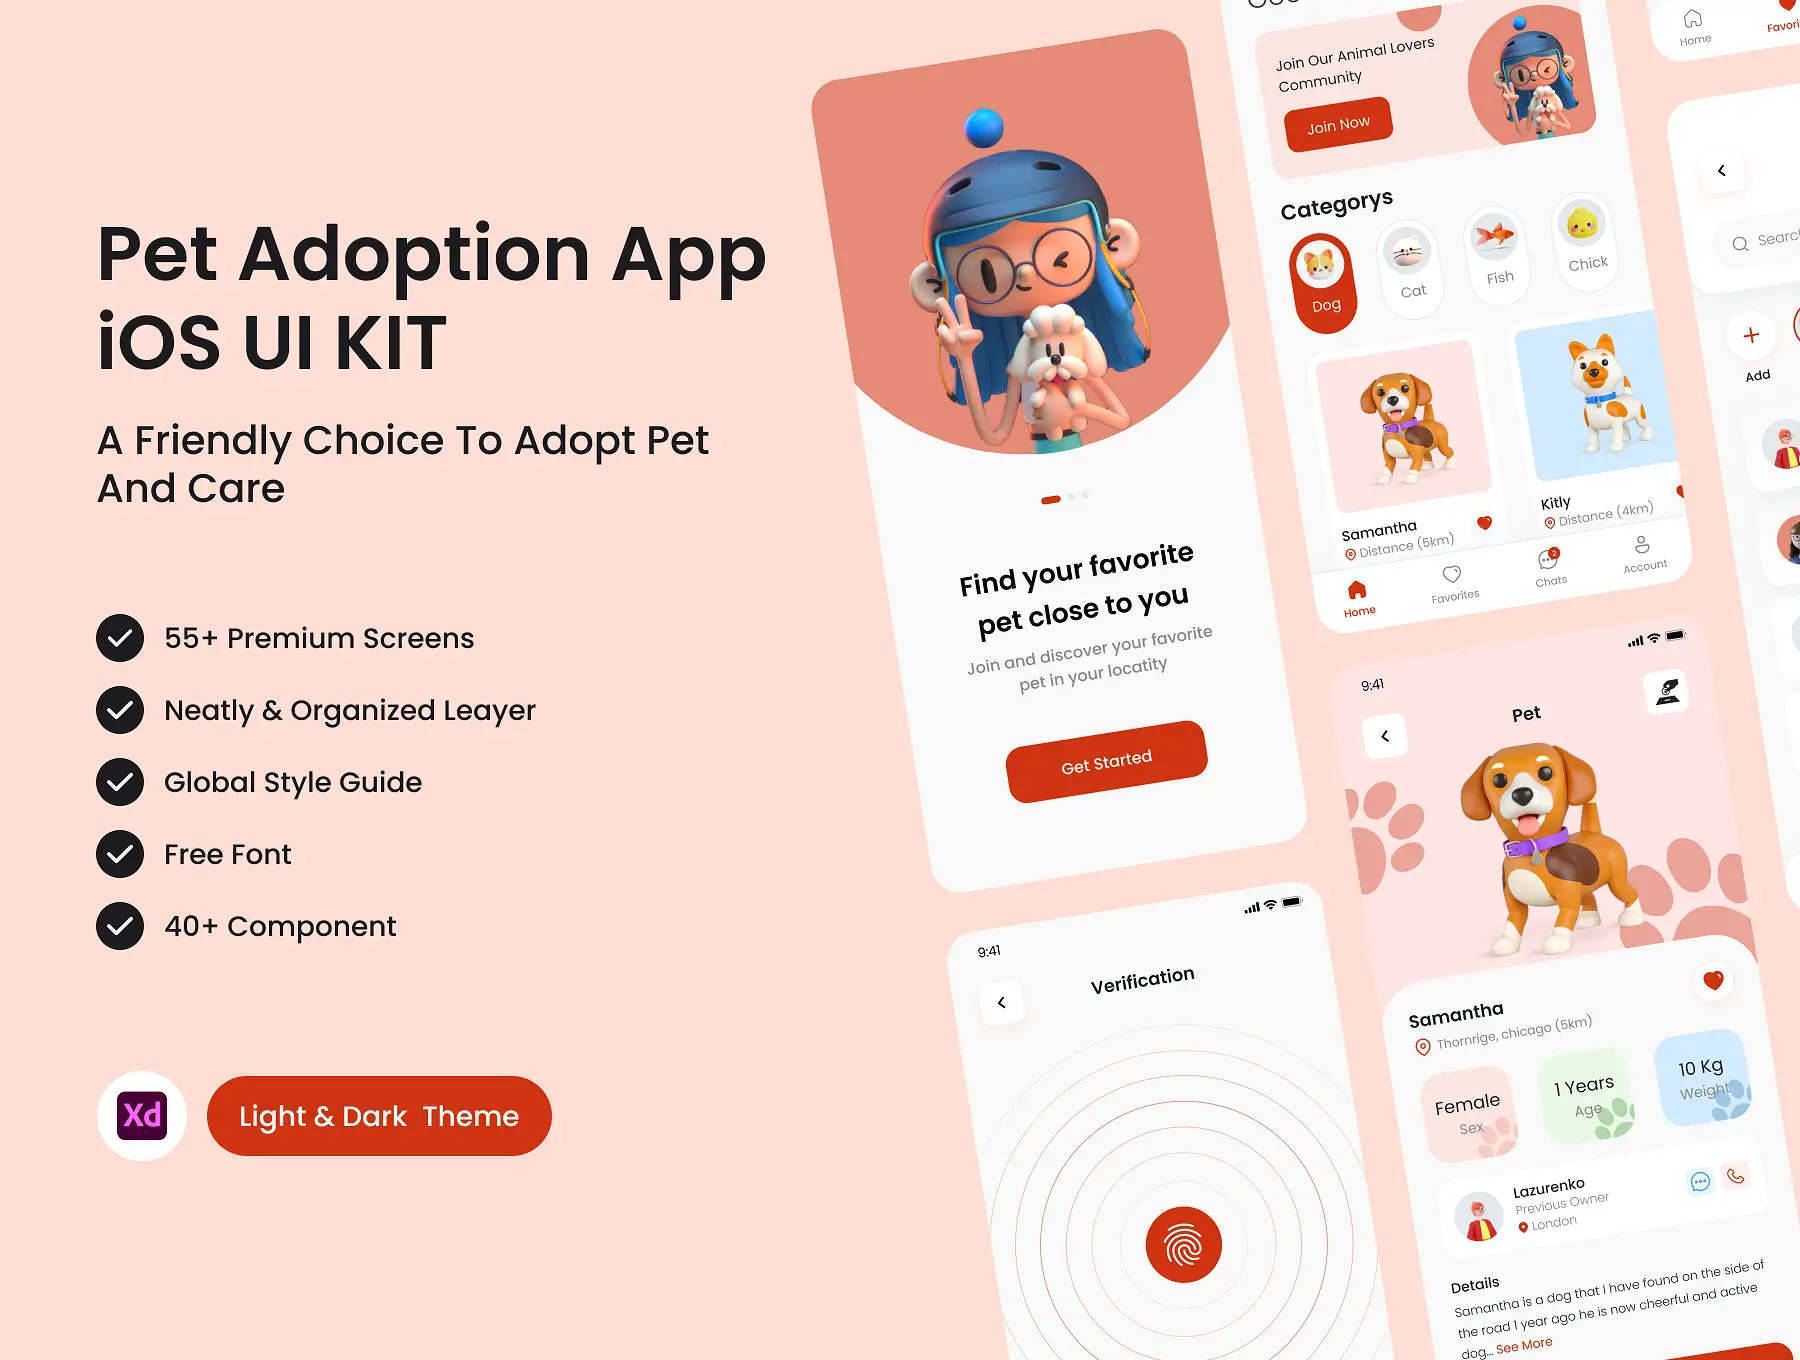 宠物收养应用程序Pet Adoption App